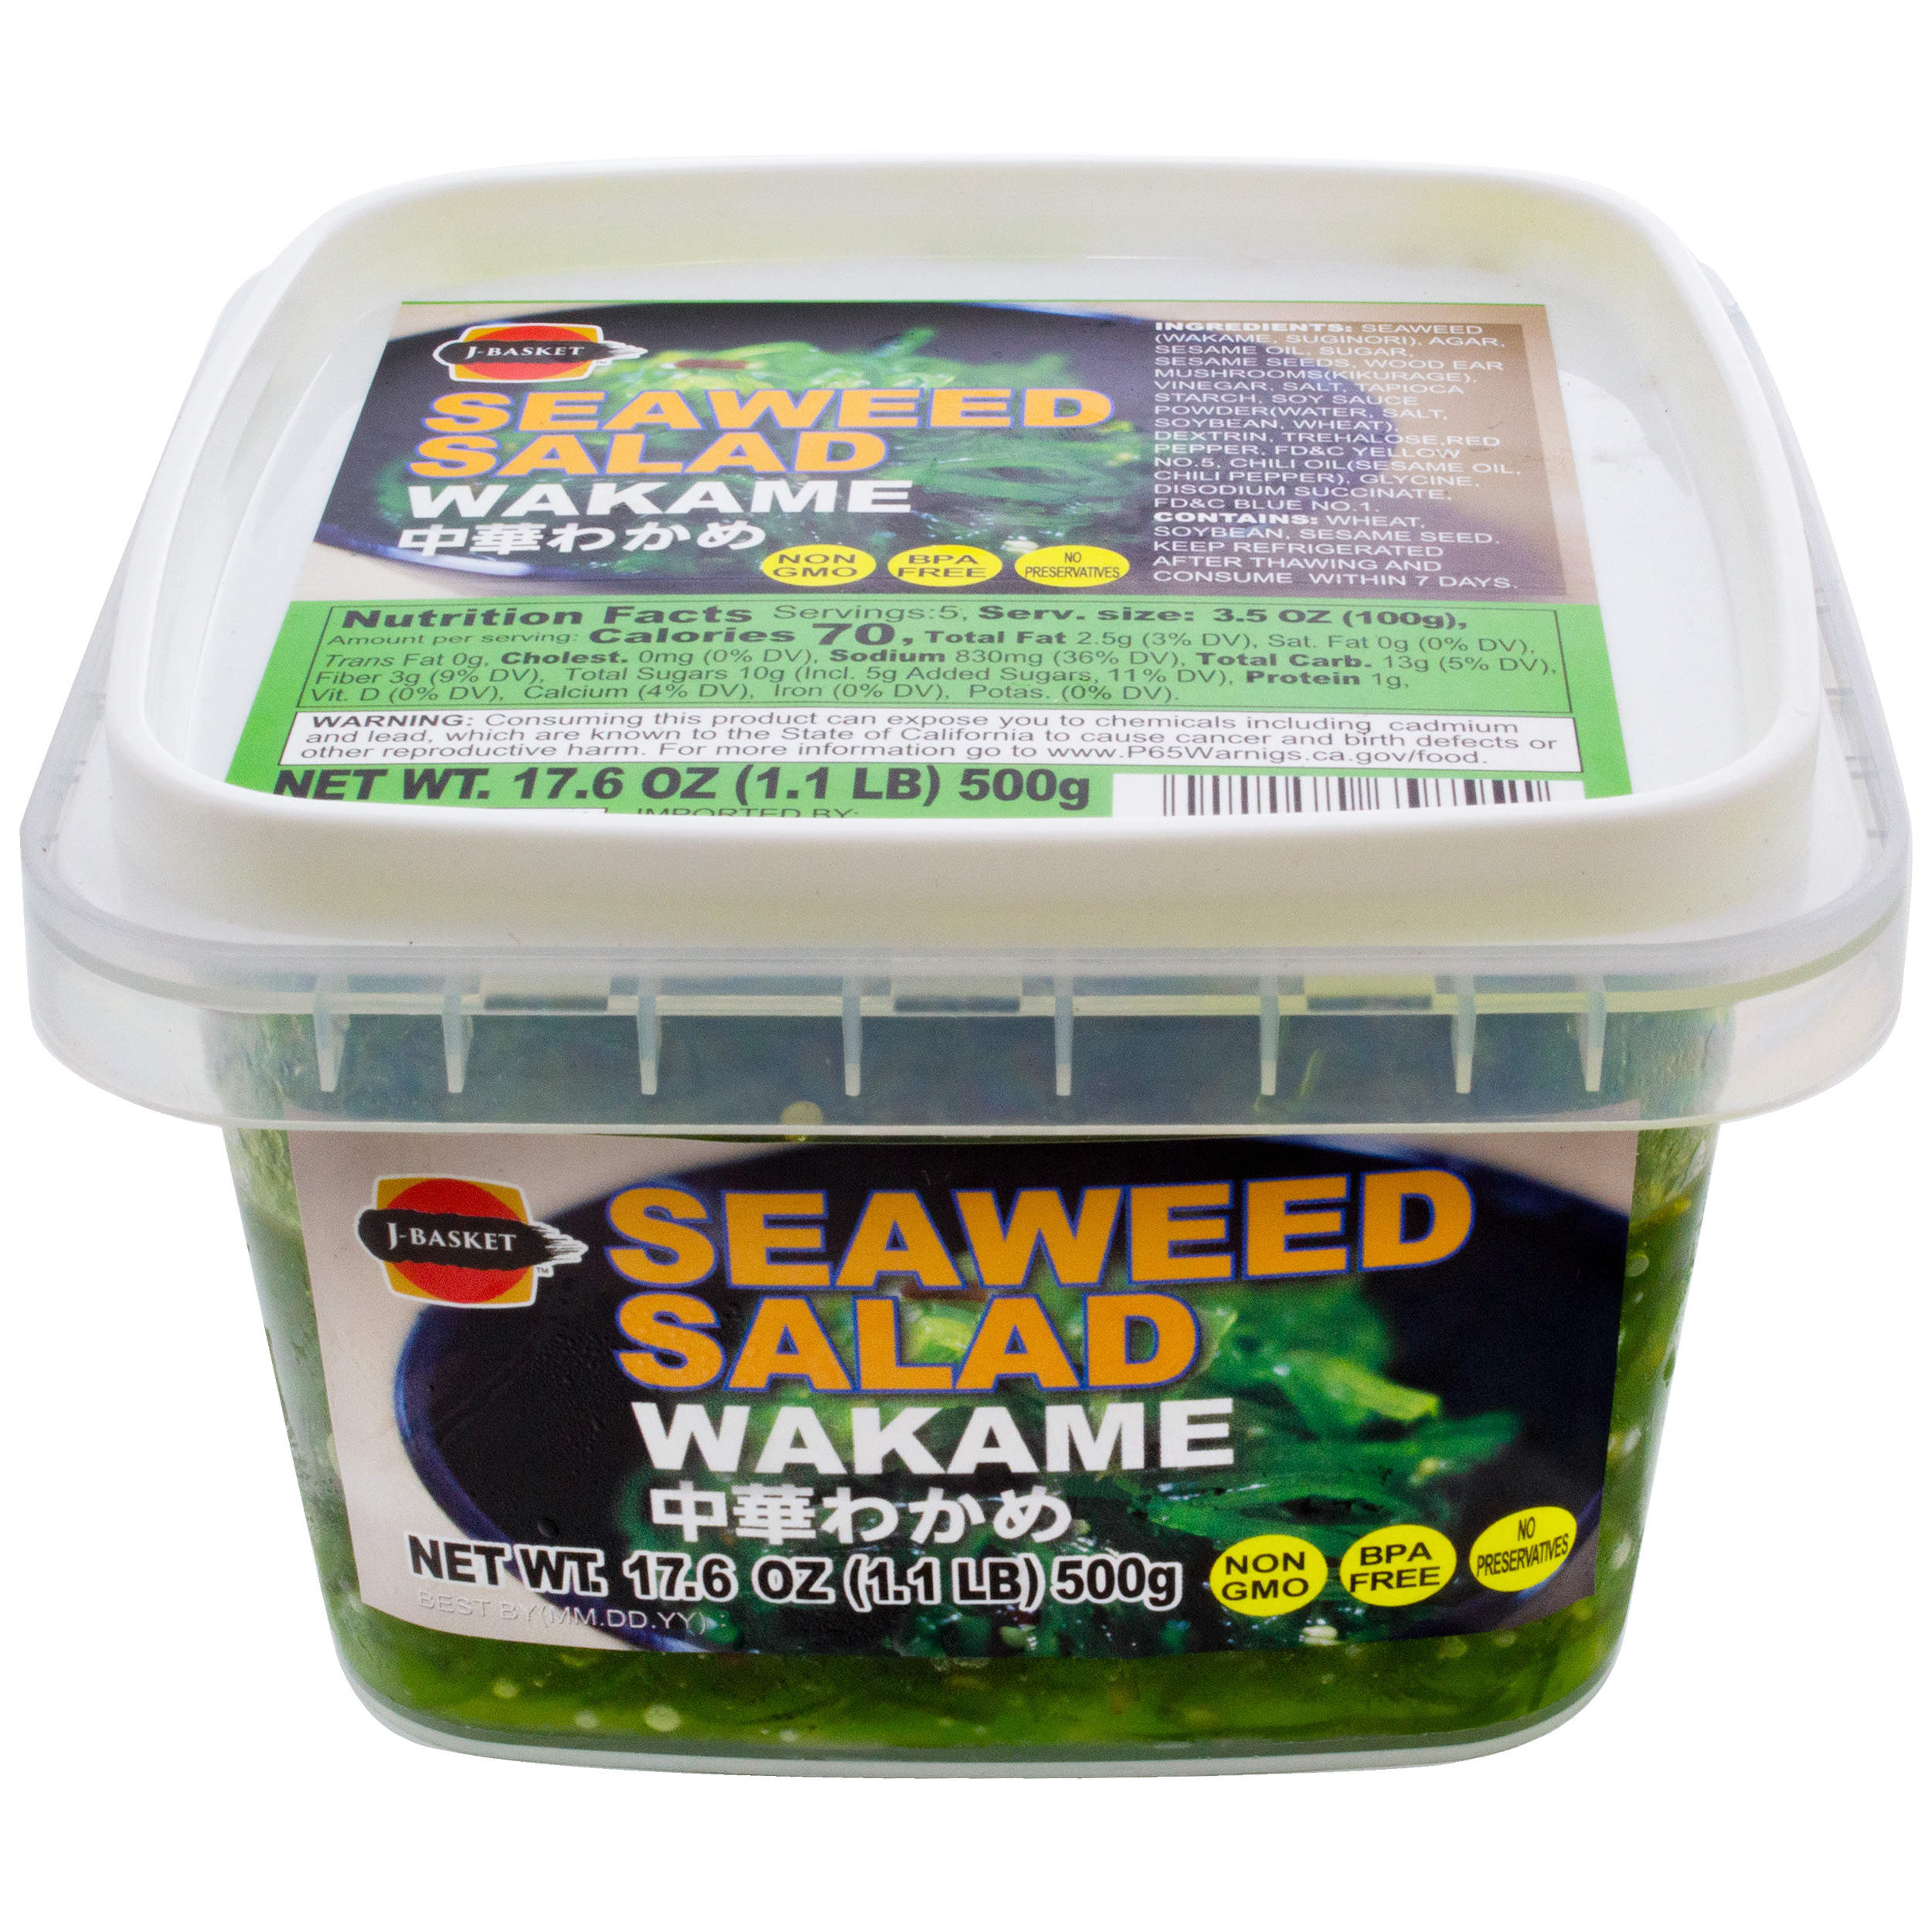 J-BASKET  SEAWEED SALAD CHUKA WAKAME  16/1.10 #